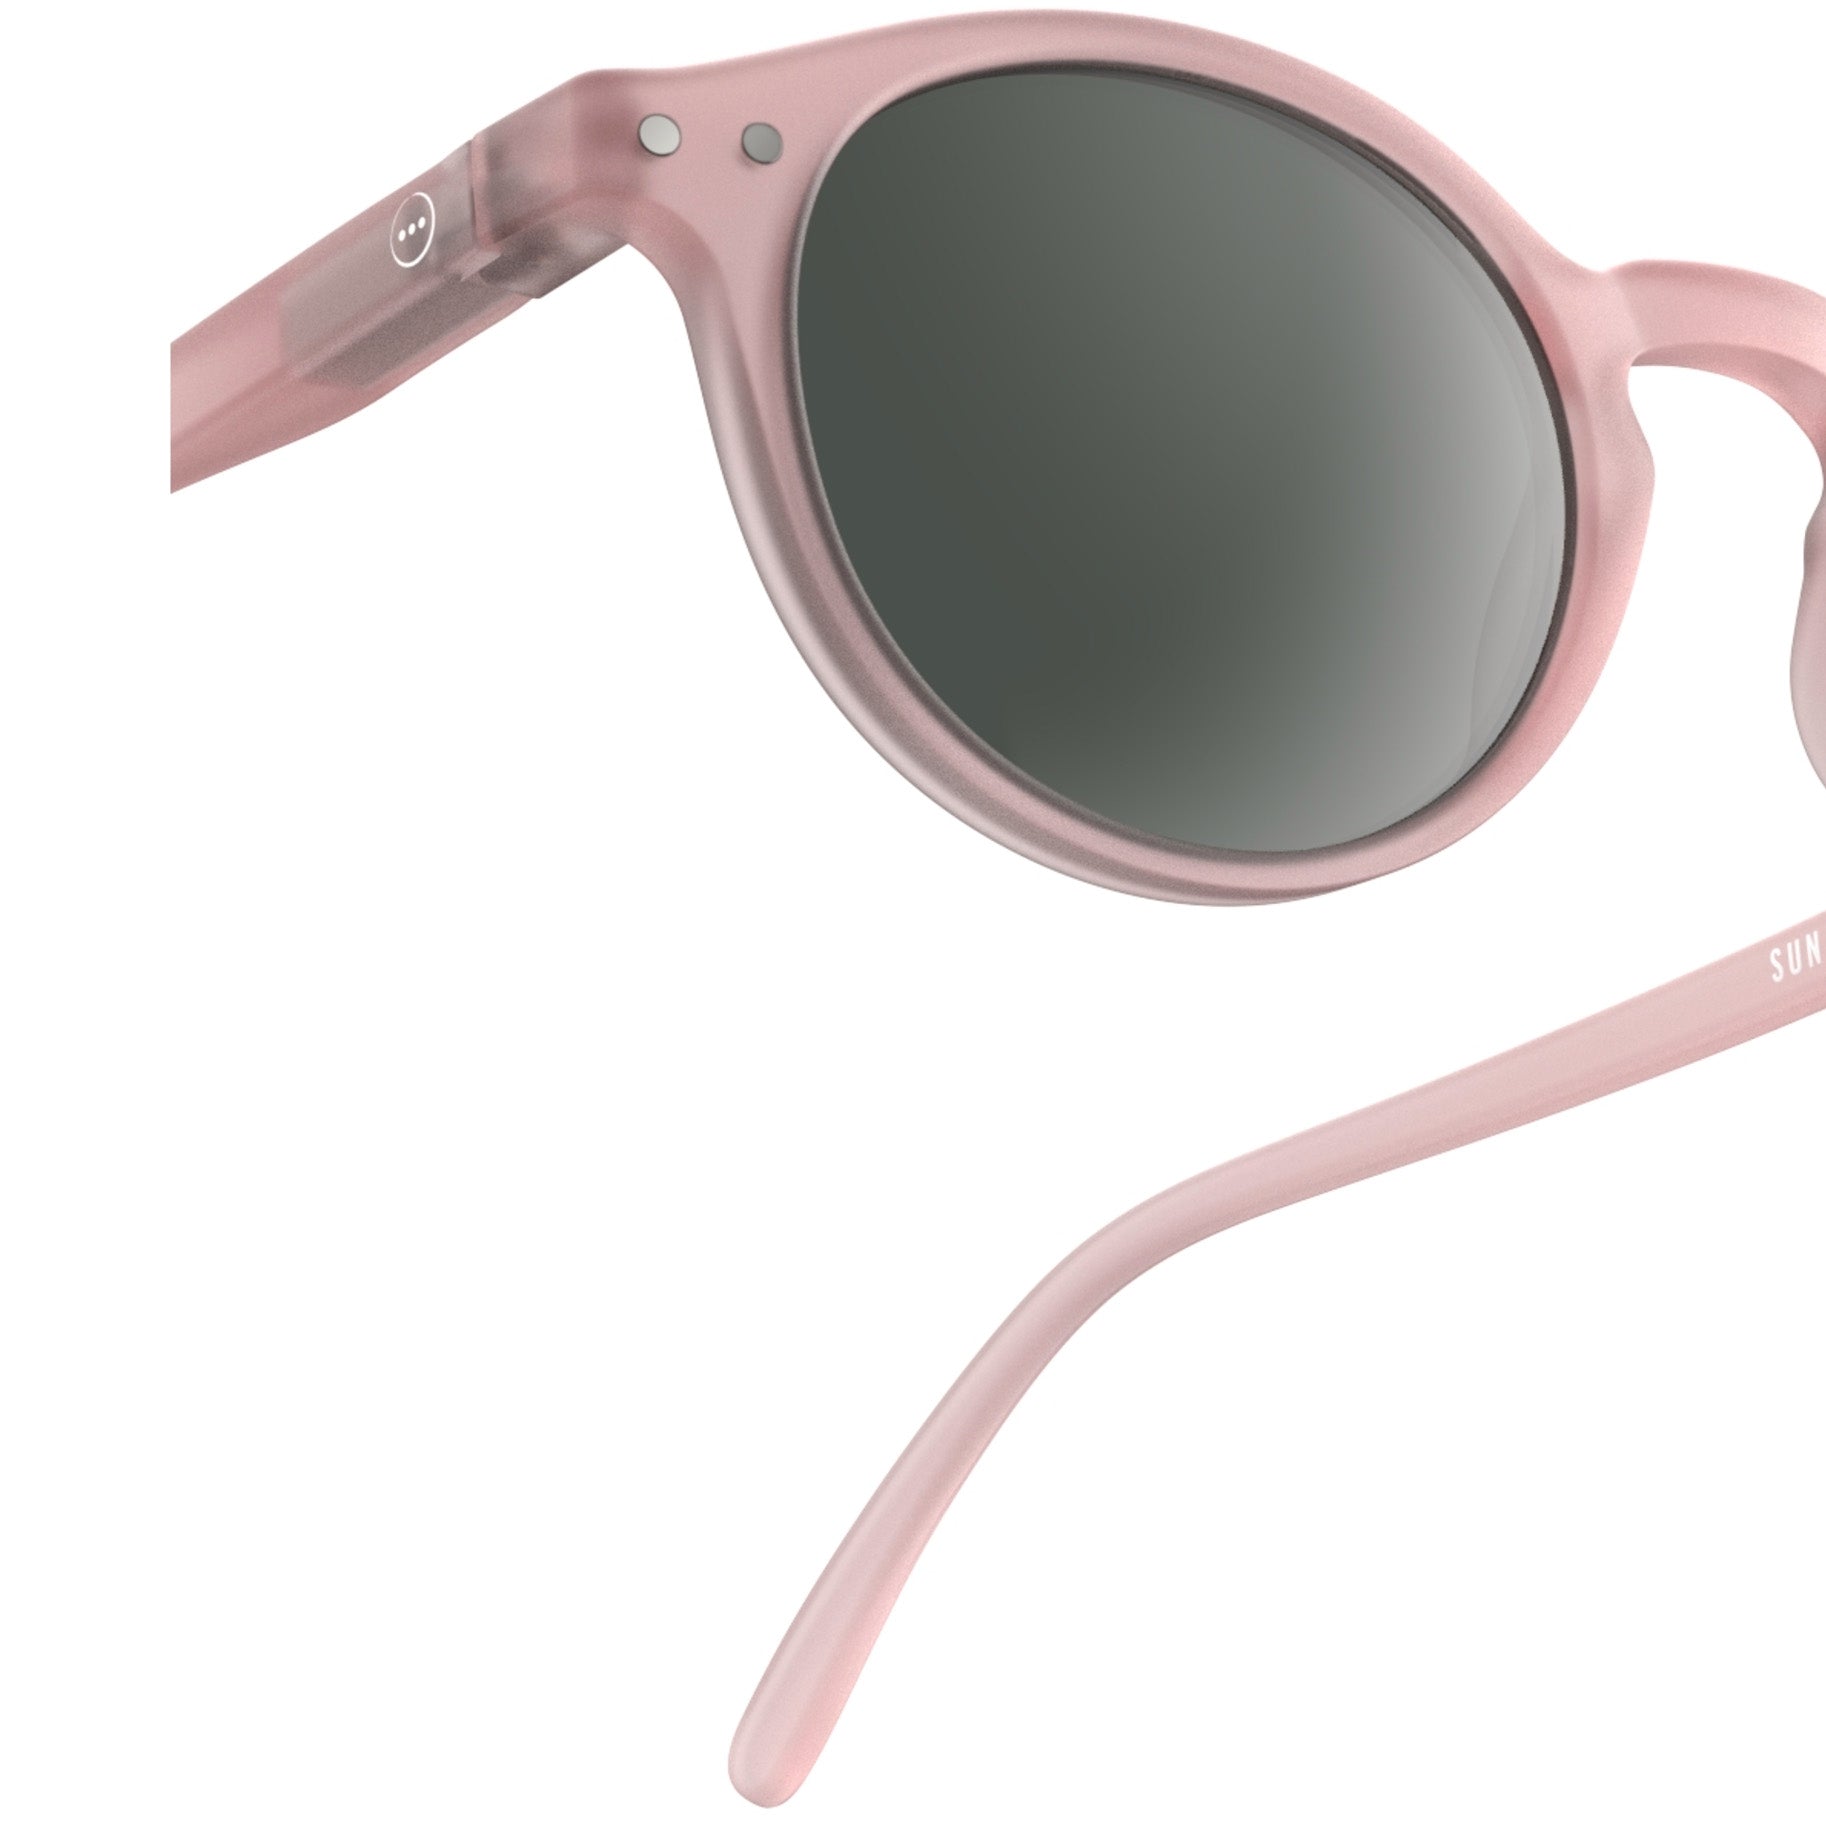 Adult Pink "SUN #H" Sunglasses